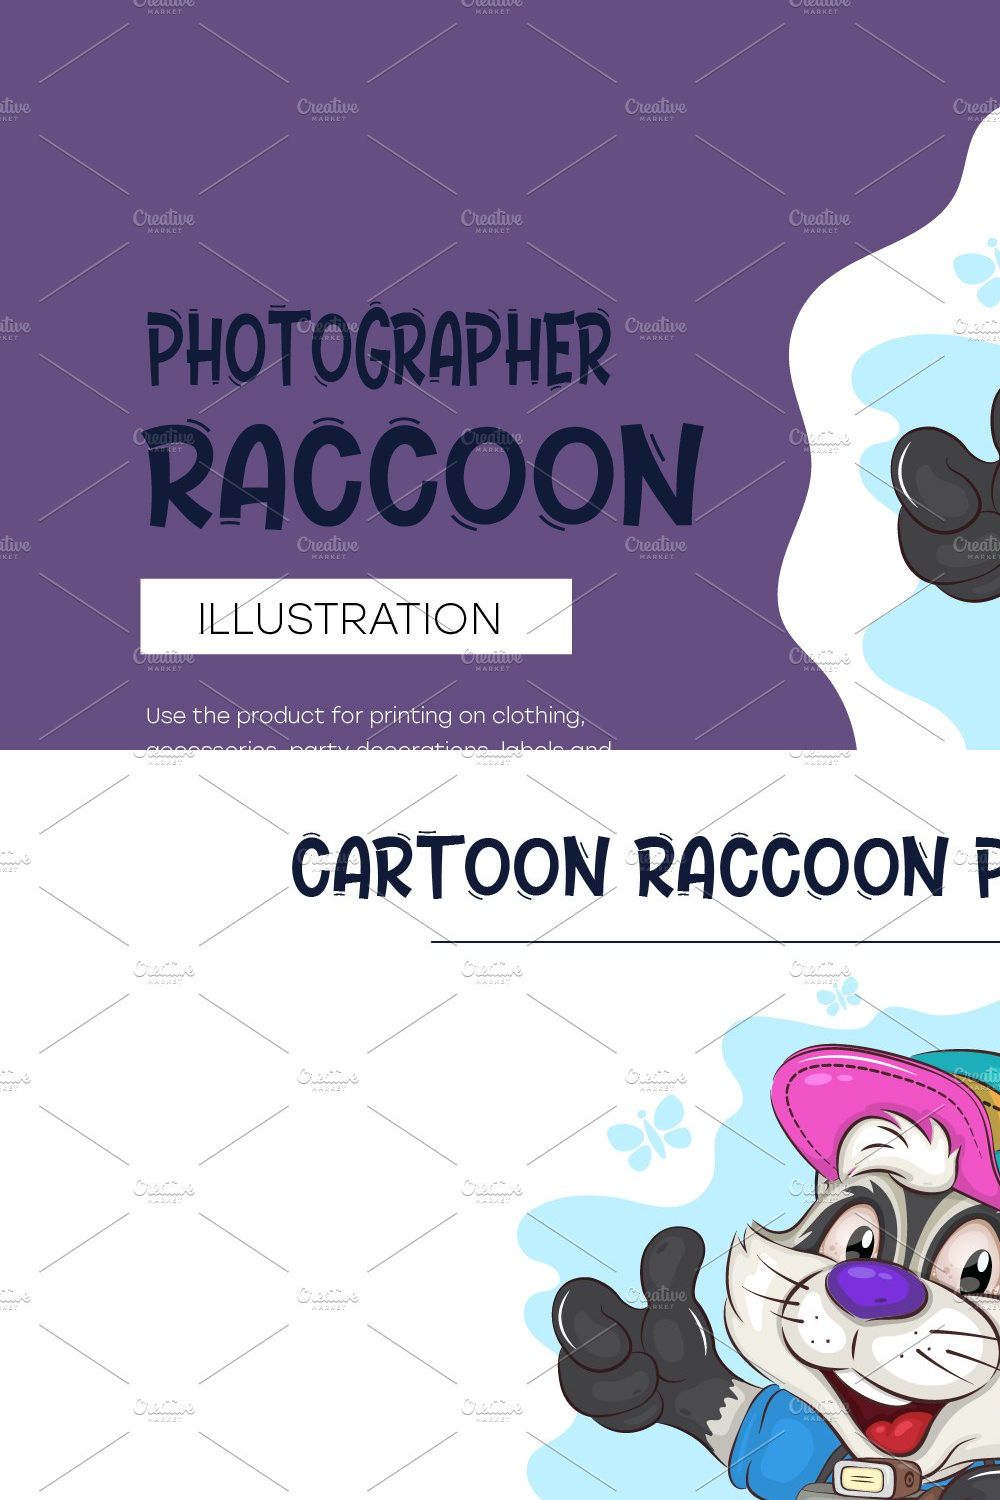 Cartoon Raccoon Photographer. pinterest preview image.